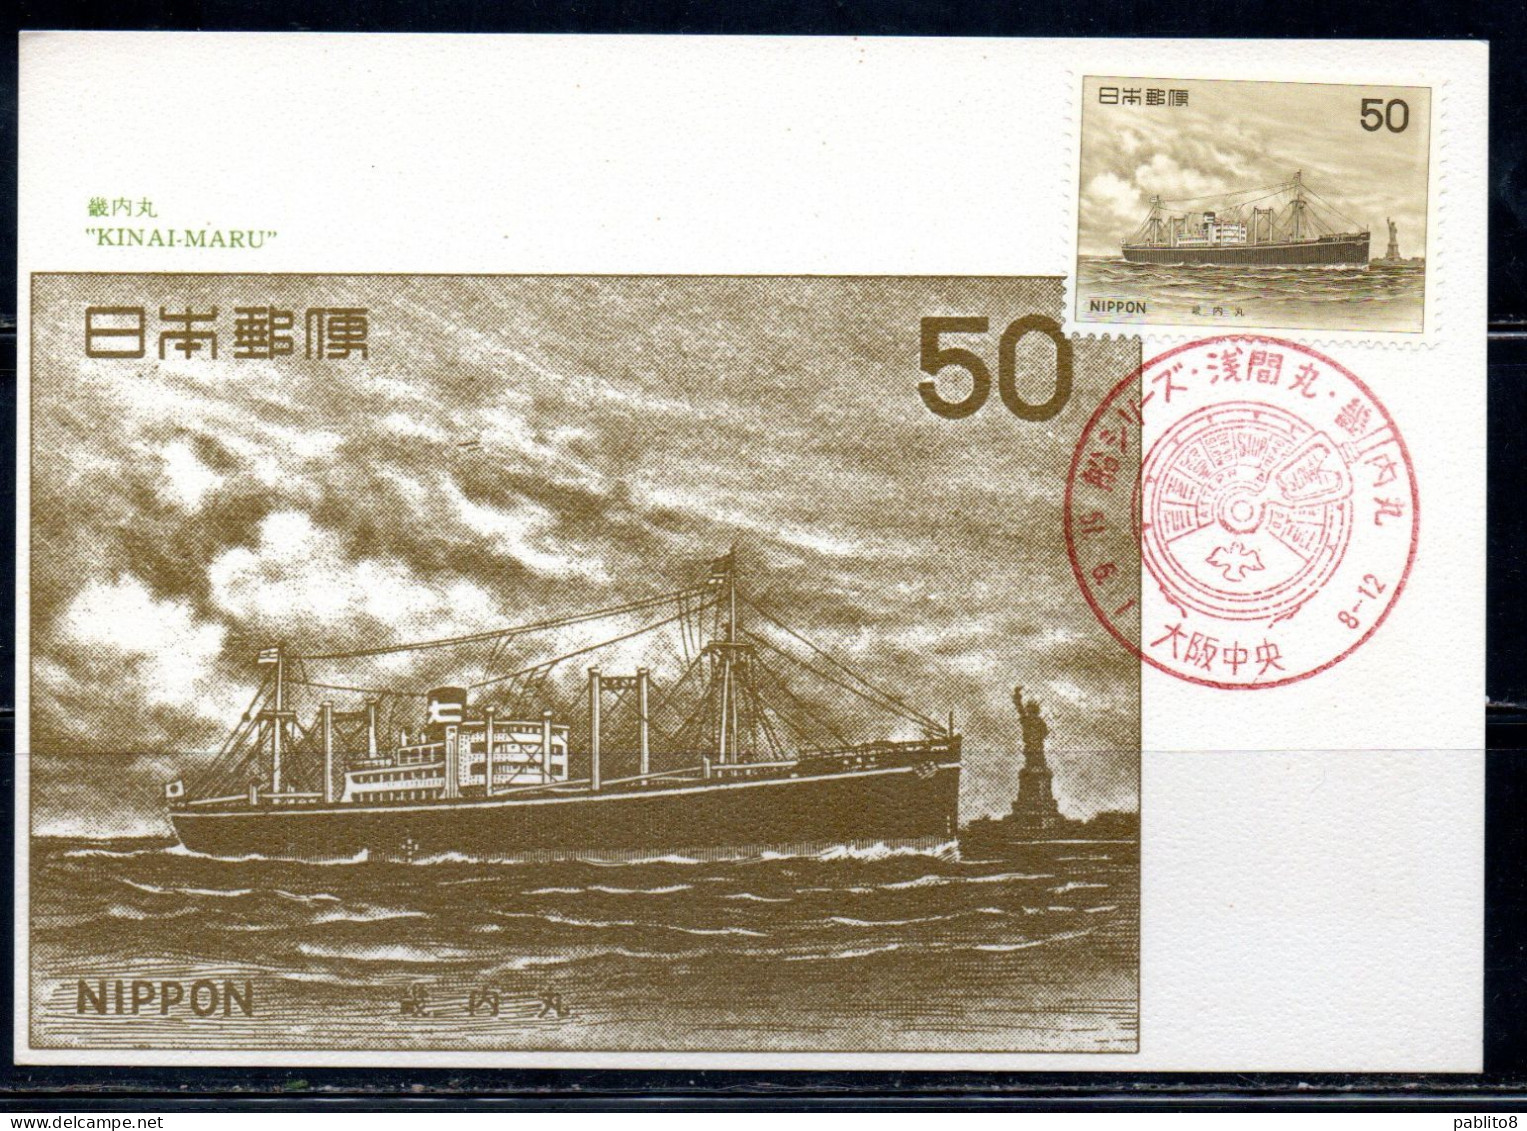 JAPAN GIAPPONE 1975 1976 HISTORIC SHIPS ISSUE KINAI-MARU SHIP 50y MAXI MAXIMUM CARD - Maximum Cards